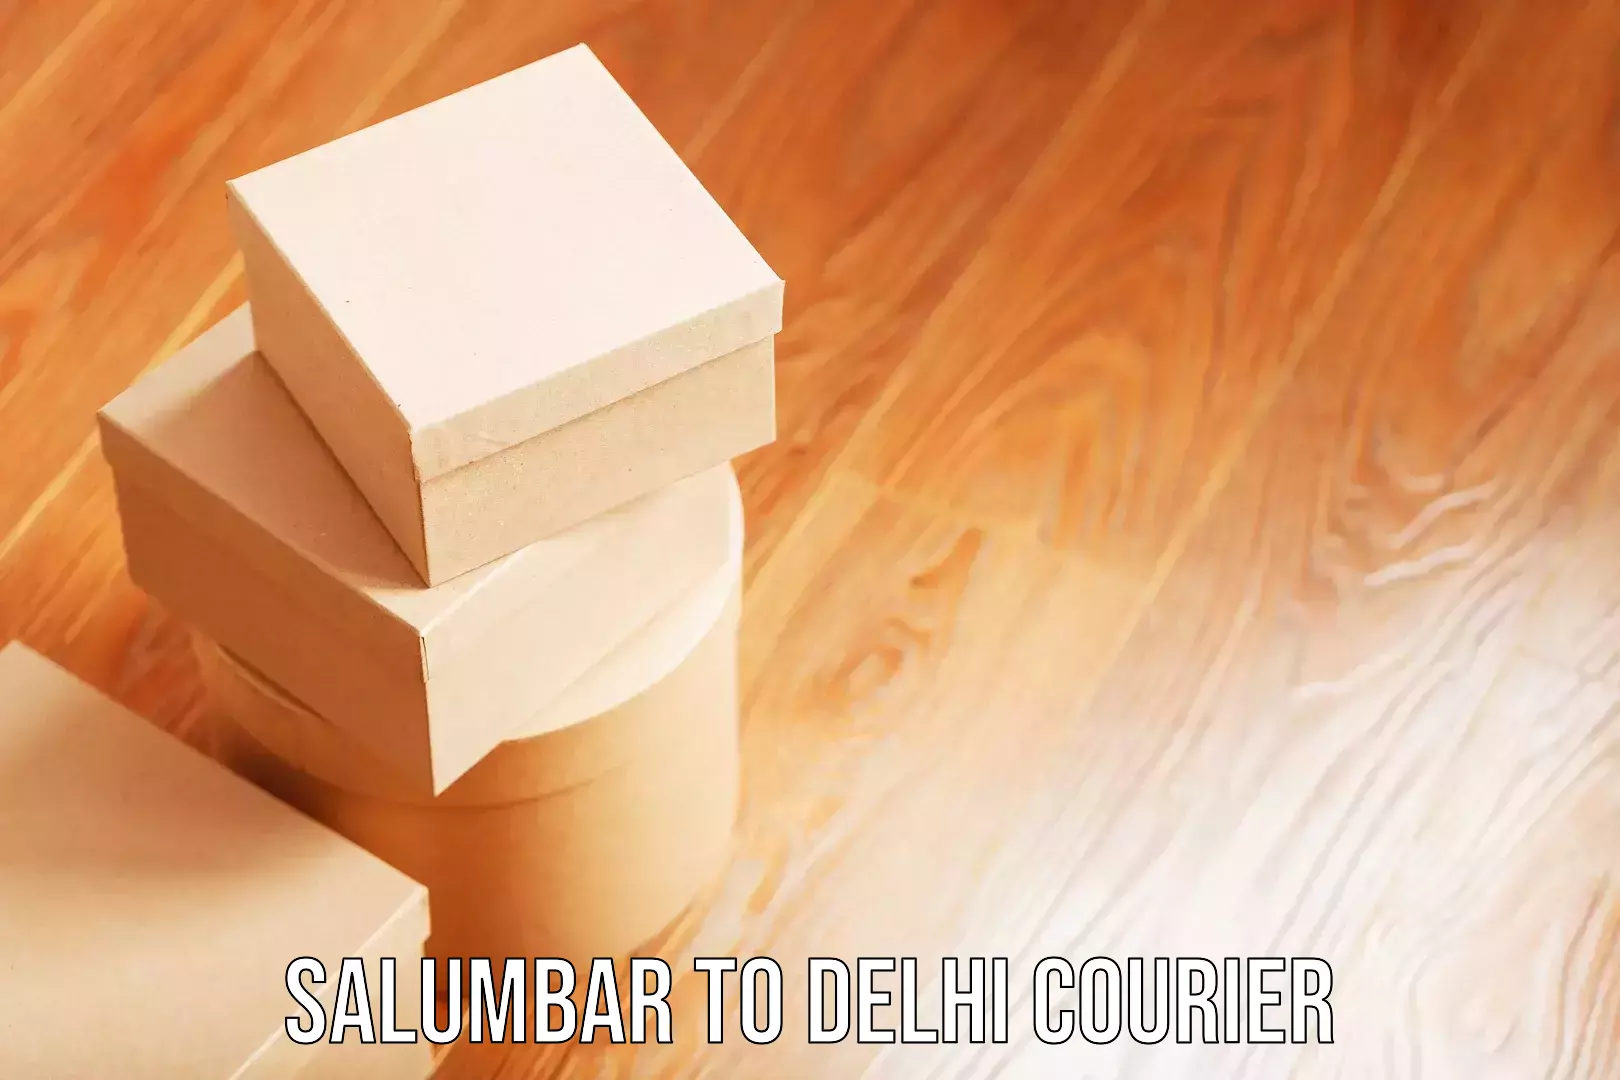 Same day luggage service Salumbar to Delhi